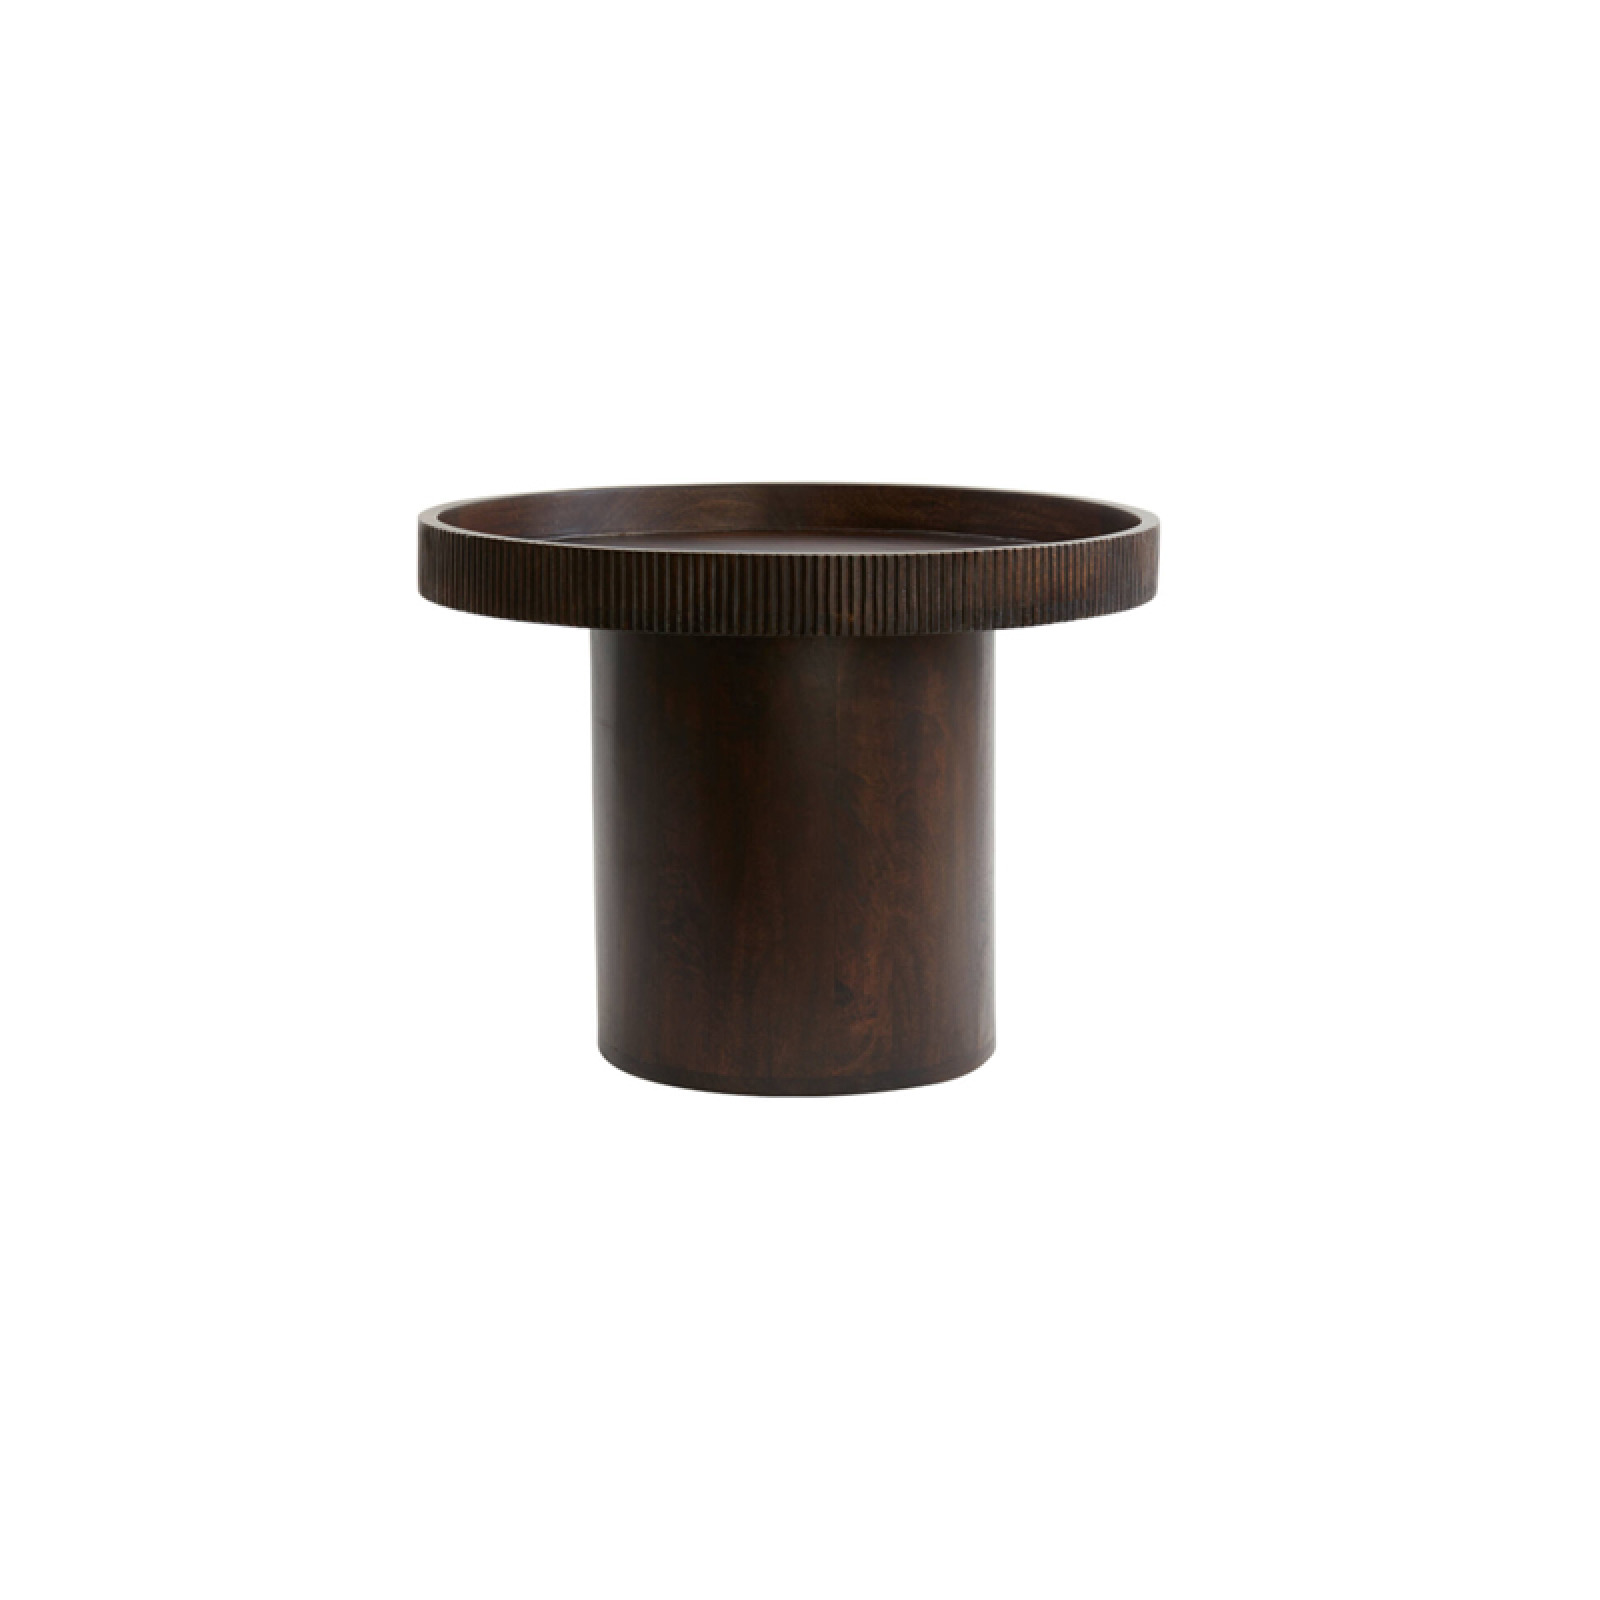 Kalomo dark brown side table